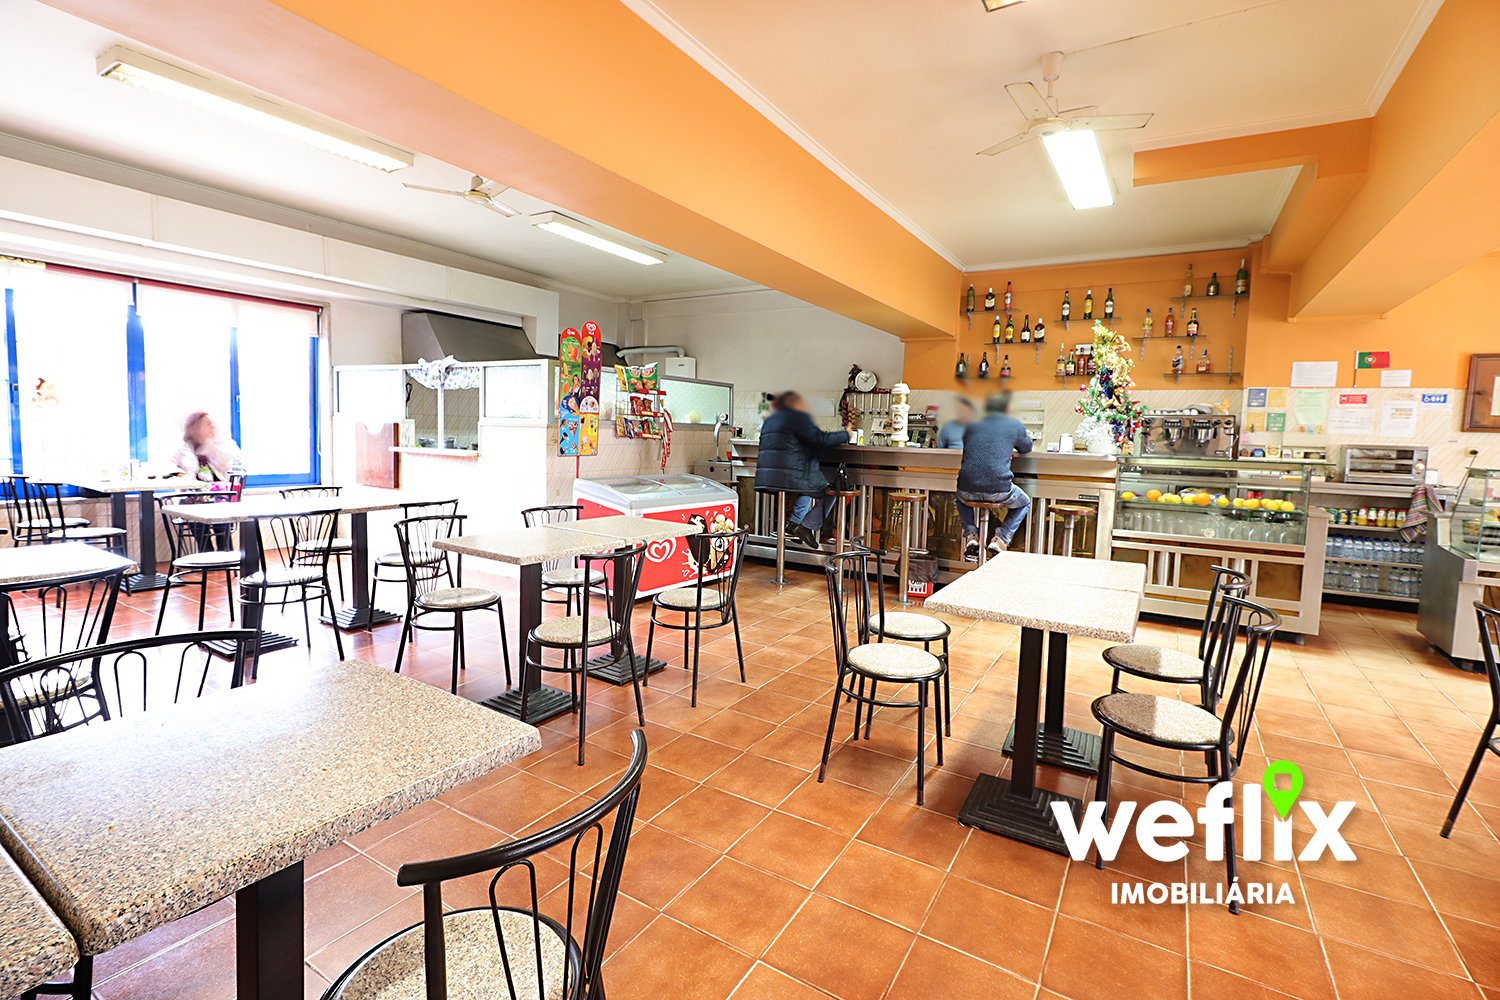 cafe restaurante loja escritorio comercio massama - weflix imobiliaria 7